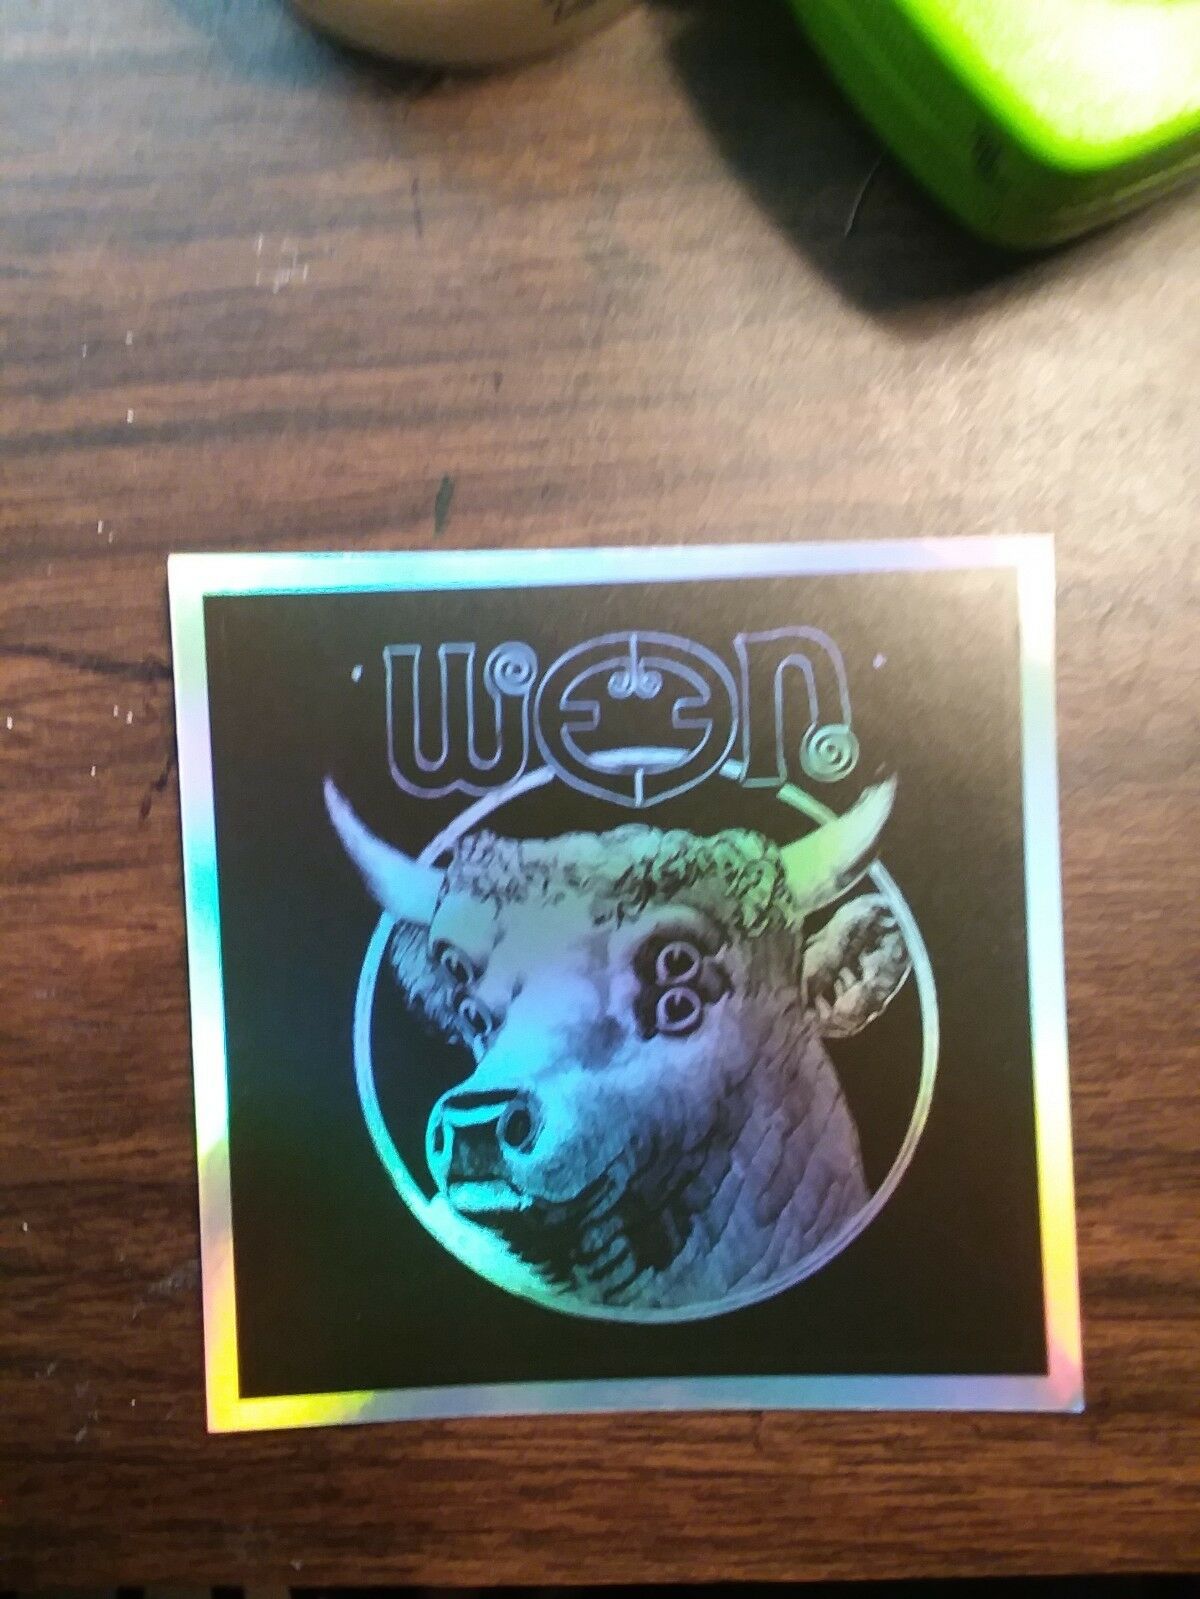 Ween Bull Hologram Sticker. Boognish Sticker.1 Sticker. Not Poster. 3x3 Inches